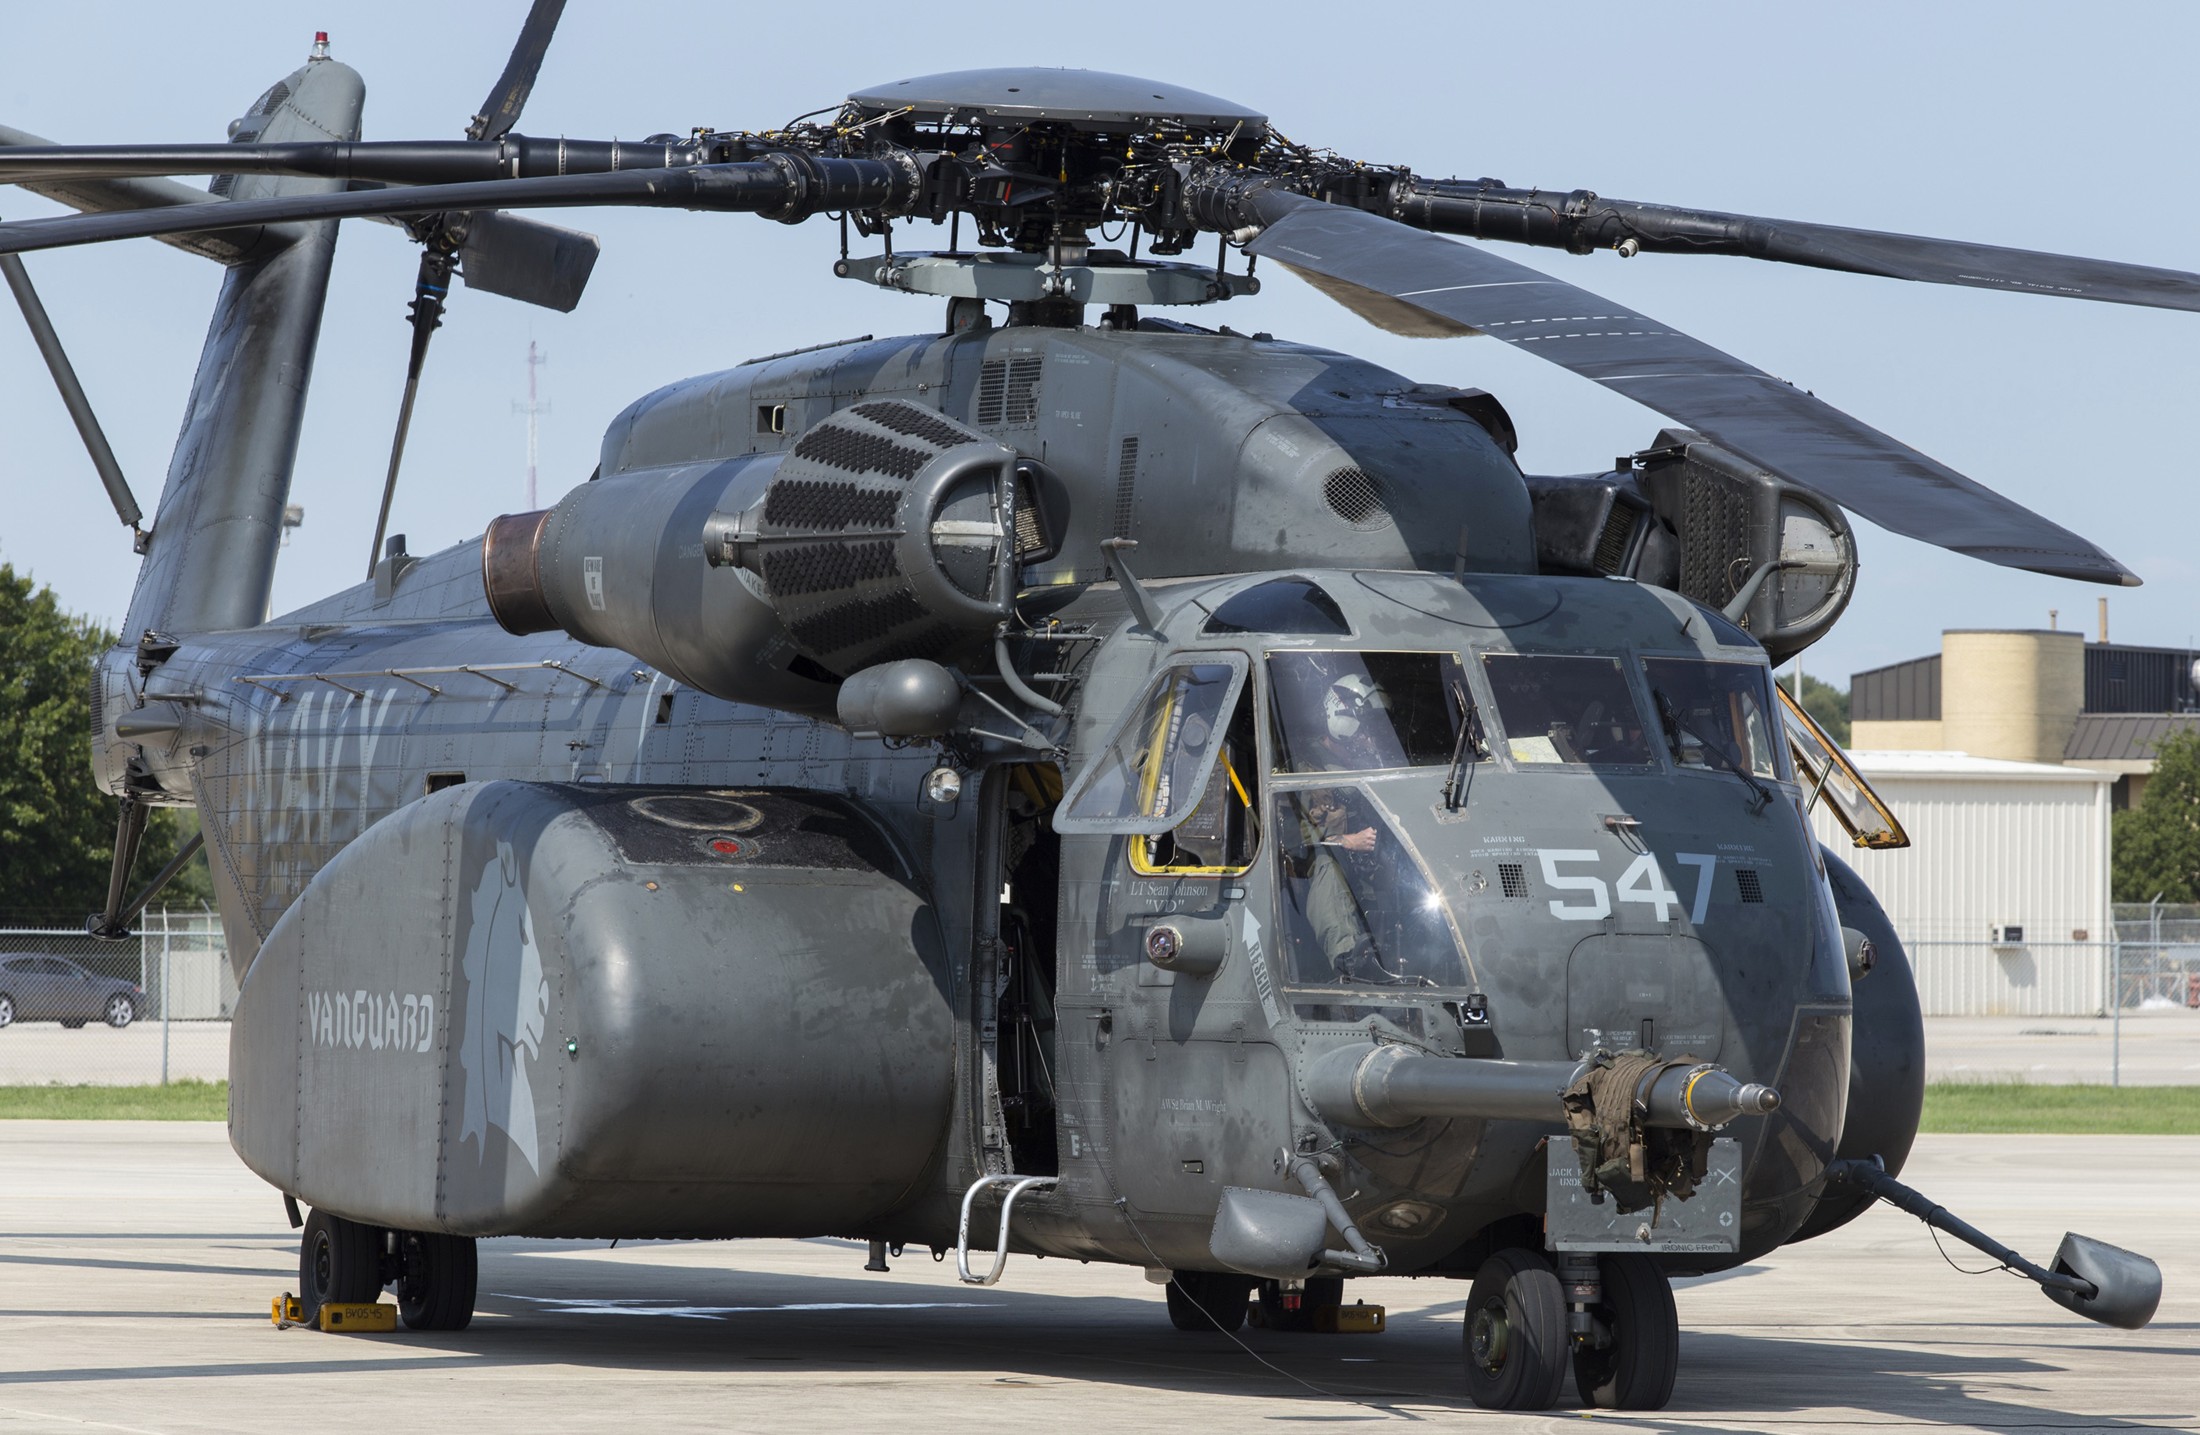 hm-14 vanguard helicopter mine countermeasures squadron navy mh-53e sea dragon 137 norfolk virginia